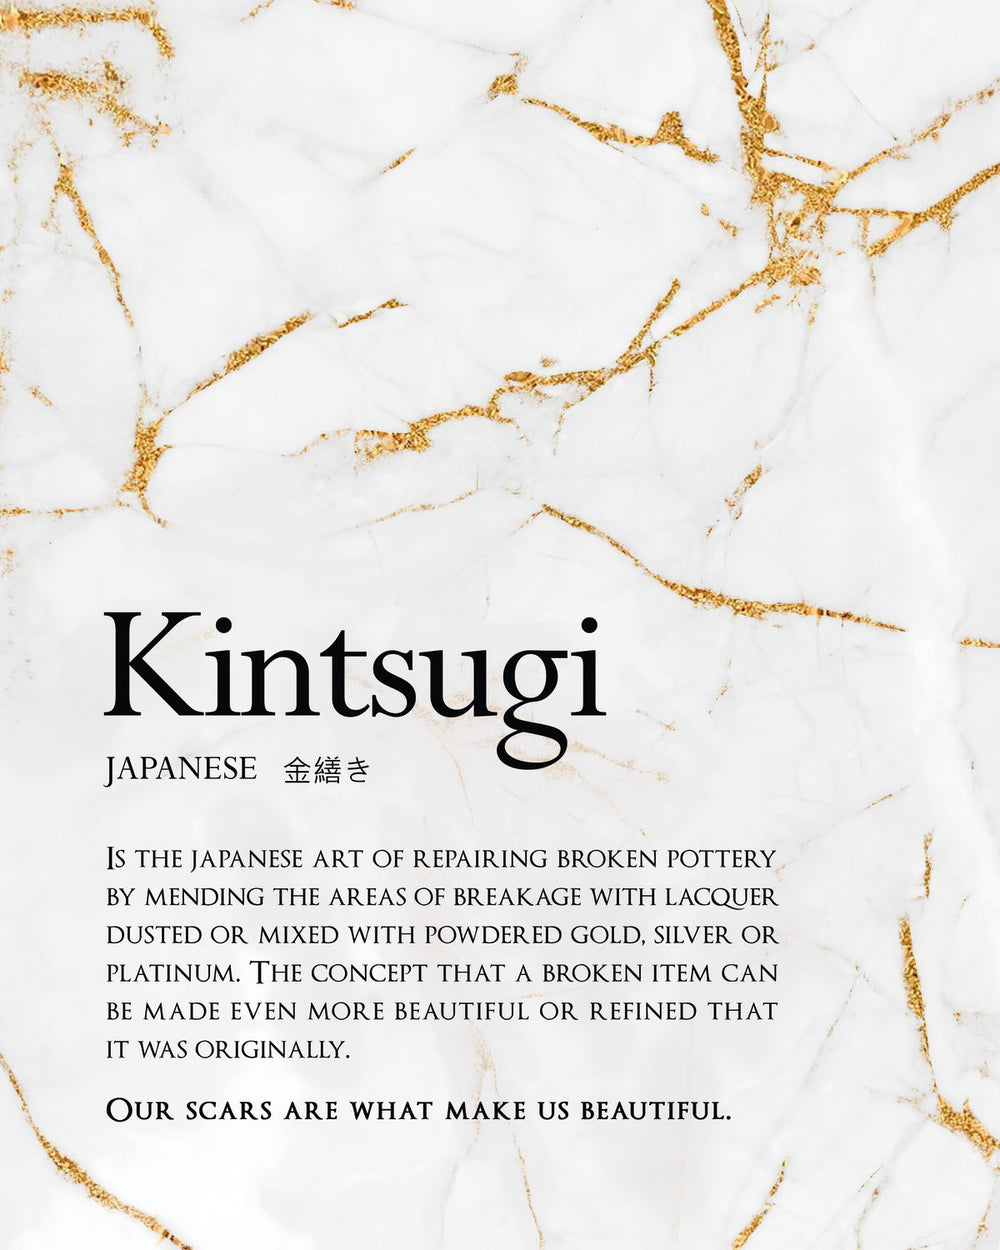 Kintsugi Defined